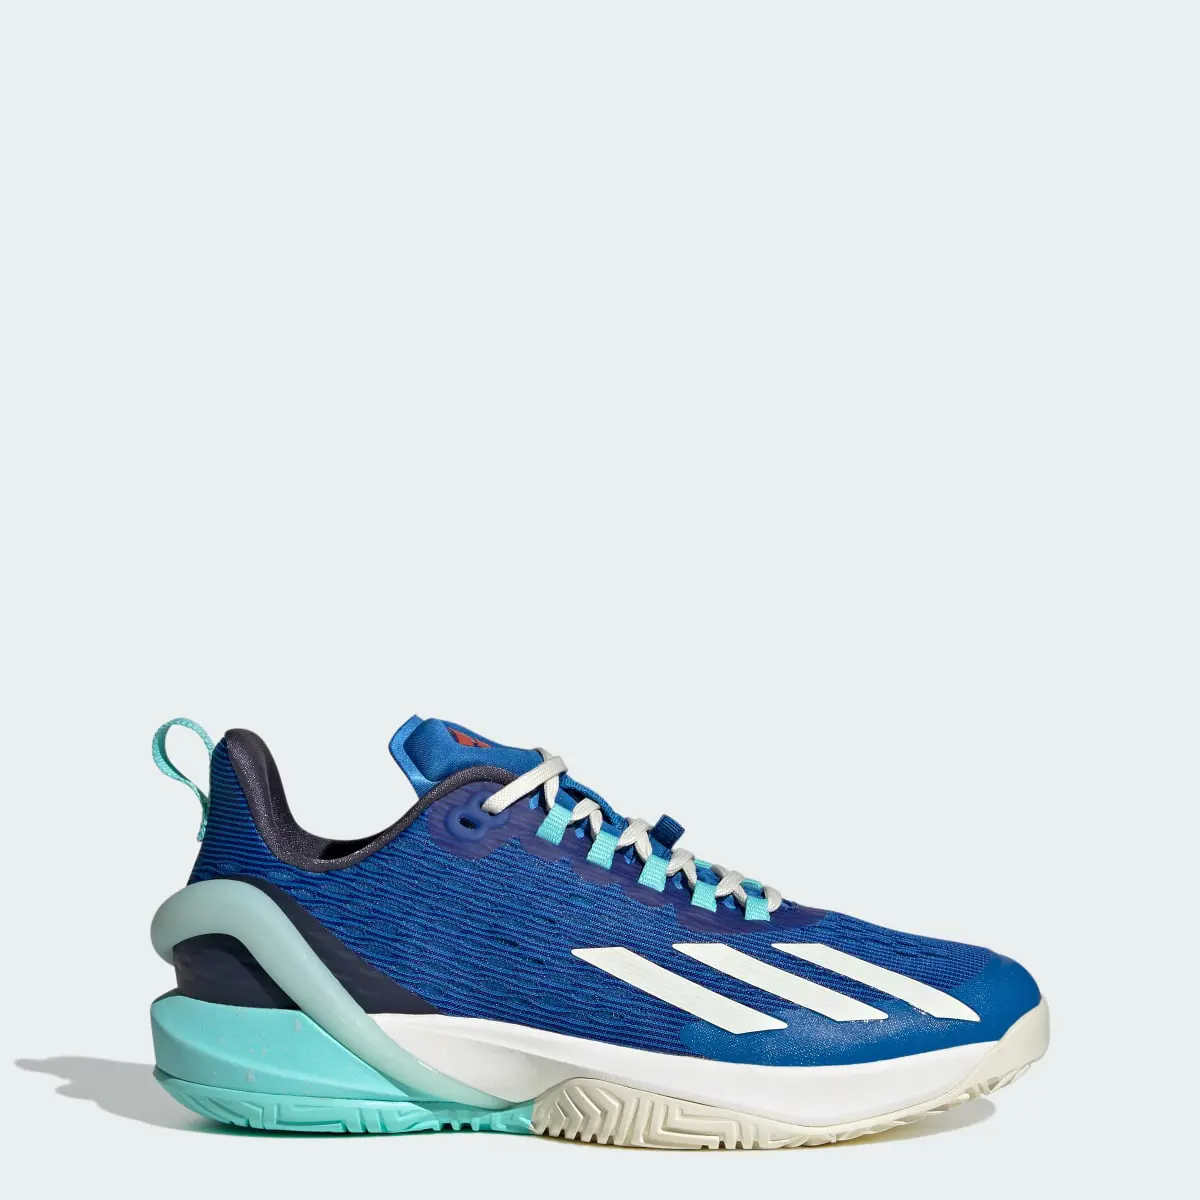 Adidas Chaussure de tennis adizero Cybersonic. 1